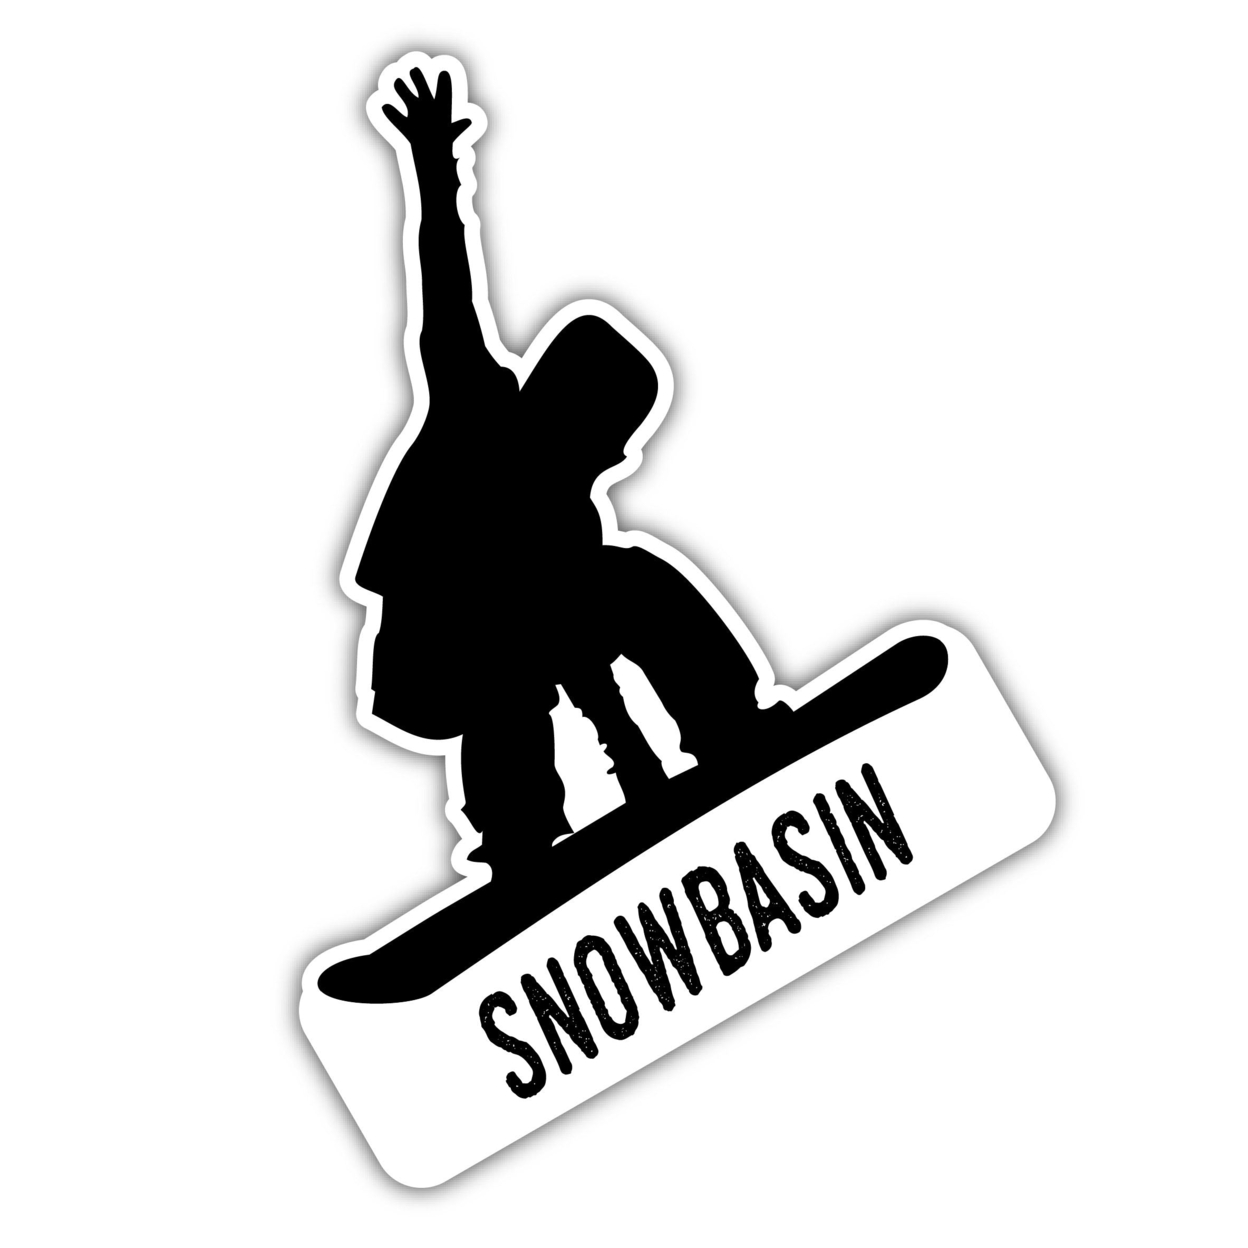 Snowbasin Utah Ski Adventures Souvenir 4 Inch Vinyl Decal Sticker Mountain Design